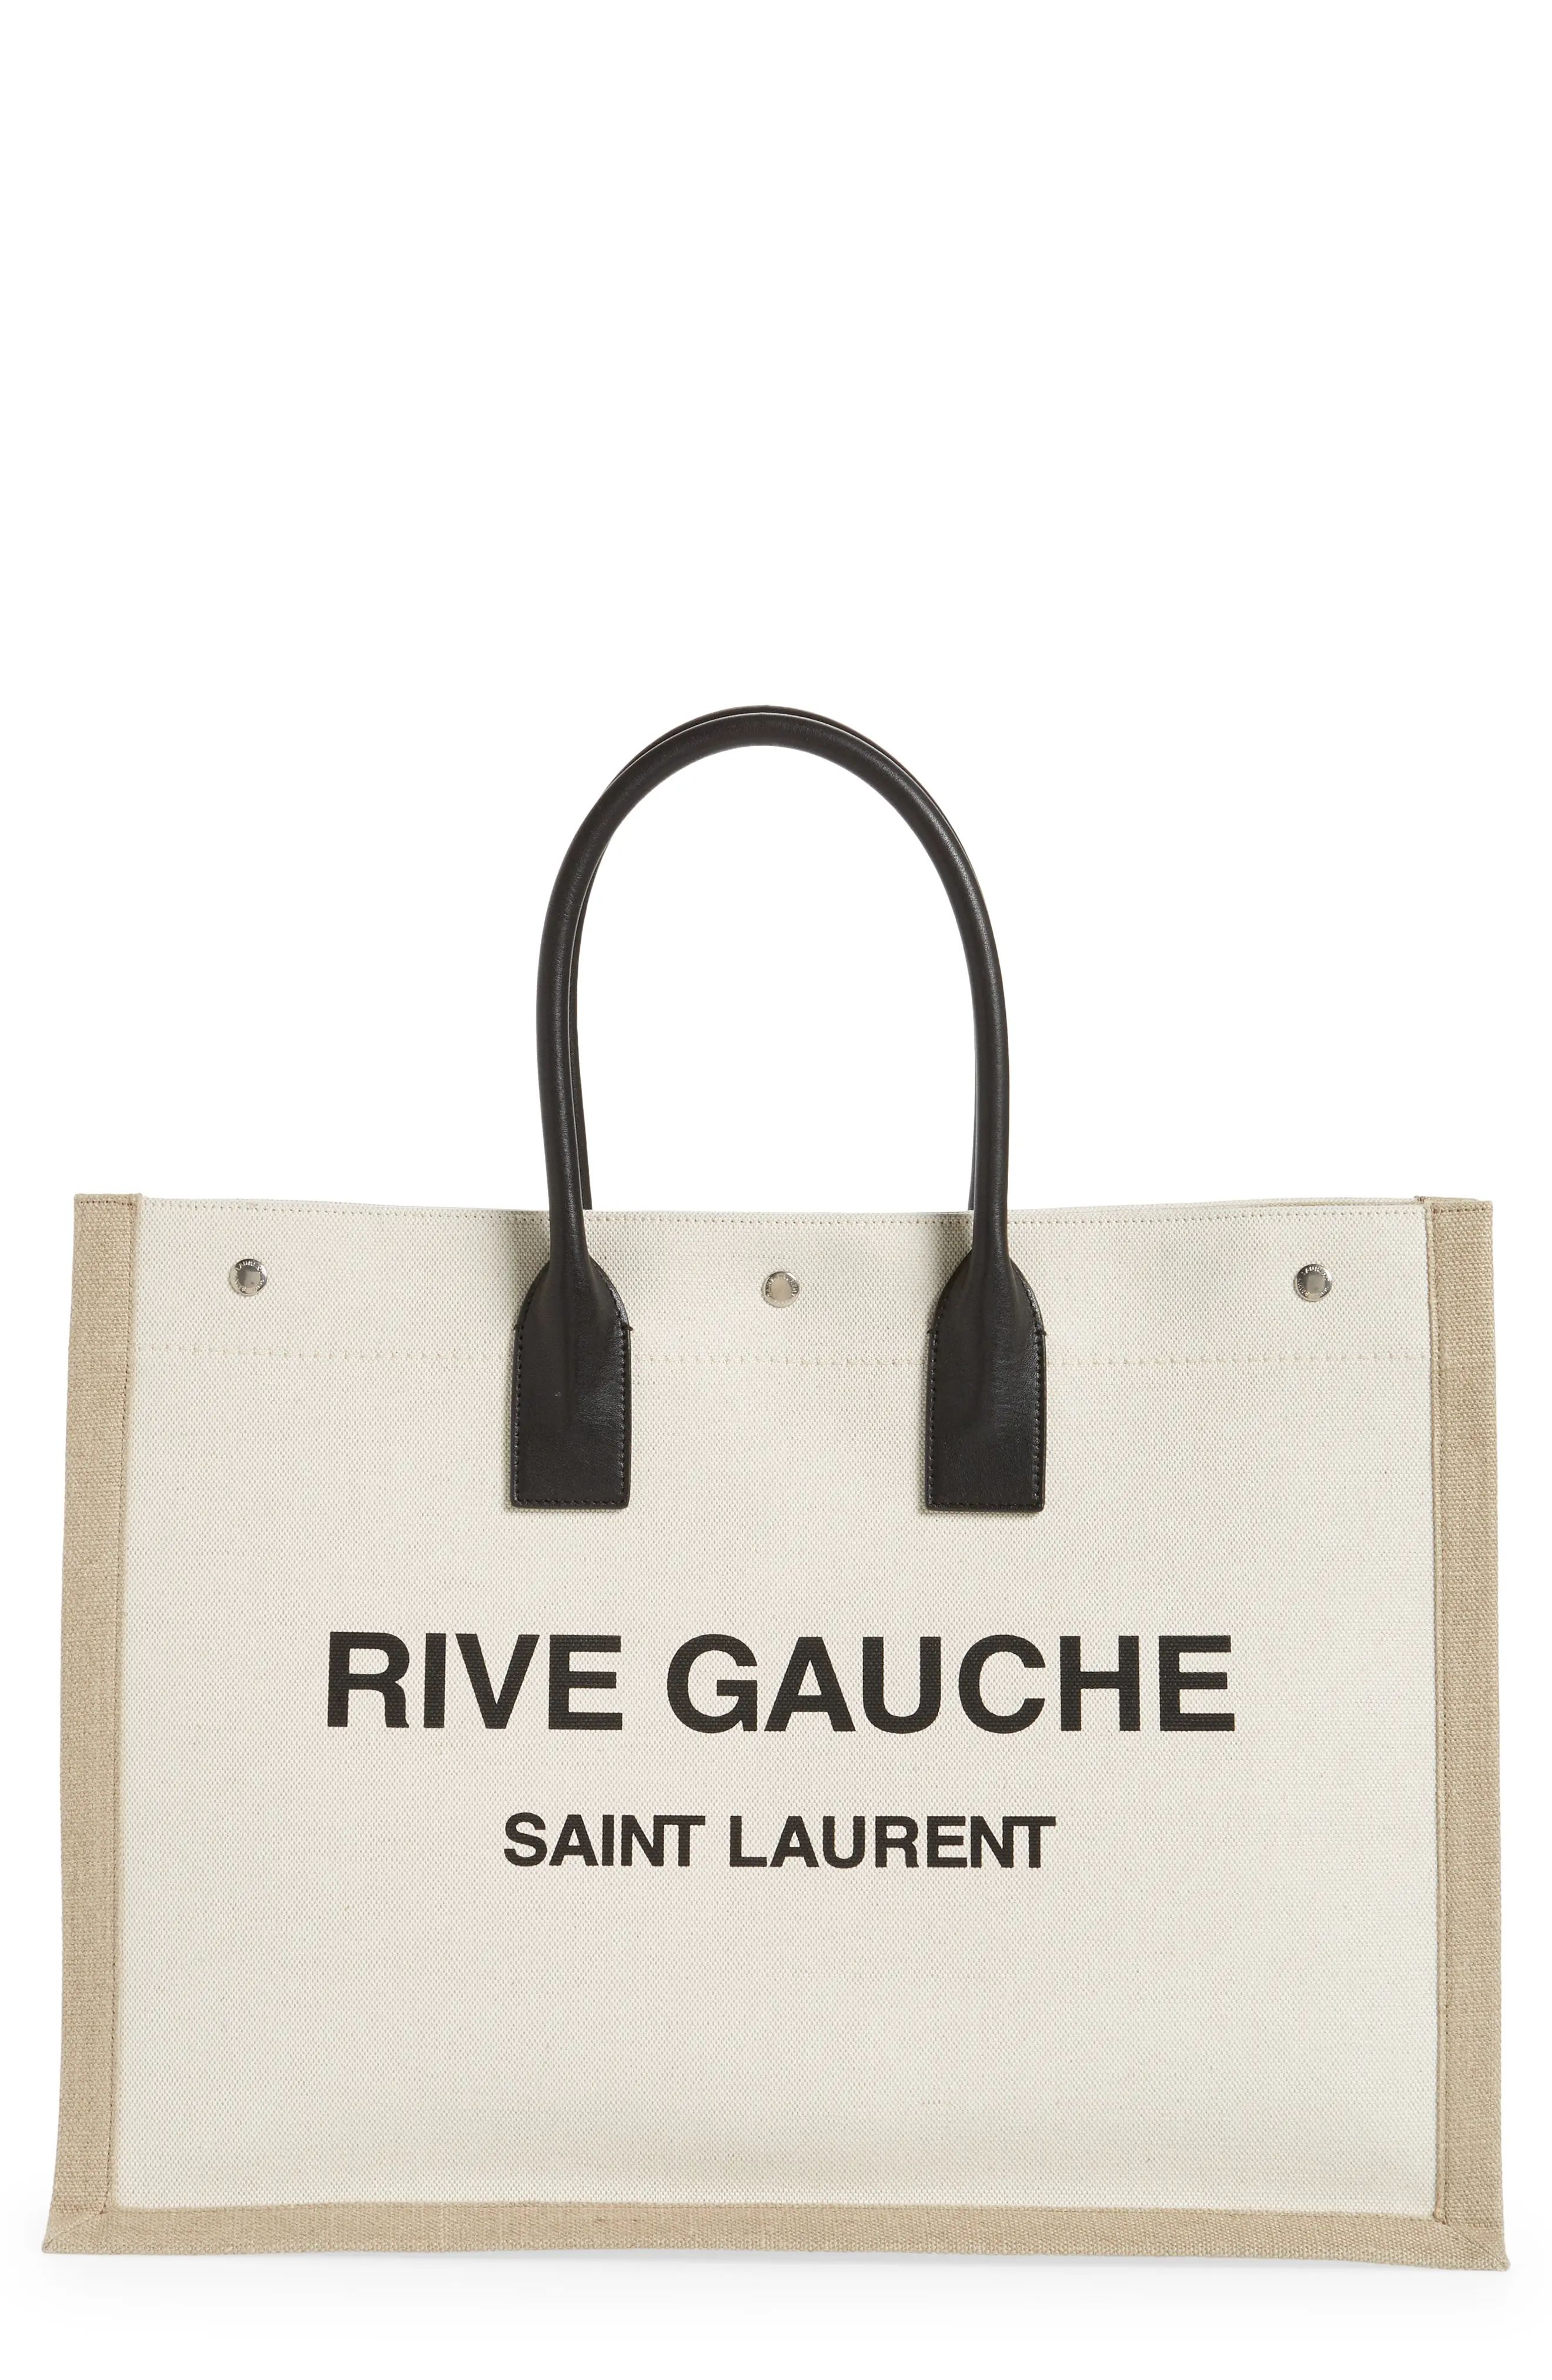 Saint Laurent Large Rive Gauche Cotton & Linen Tote in Greggio/Naturale/Ner at Nordstrom | Nordstrom